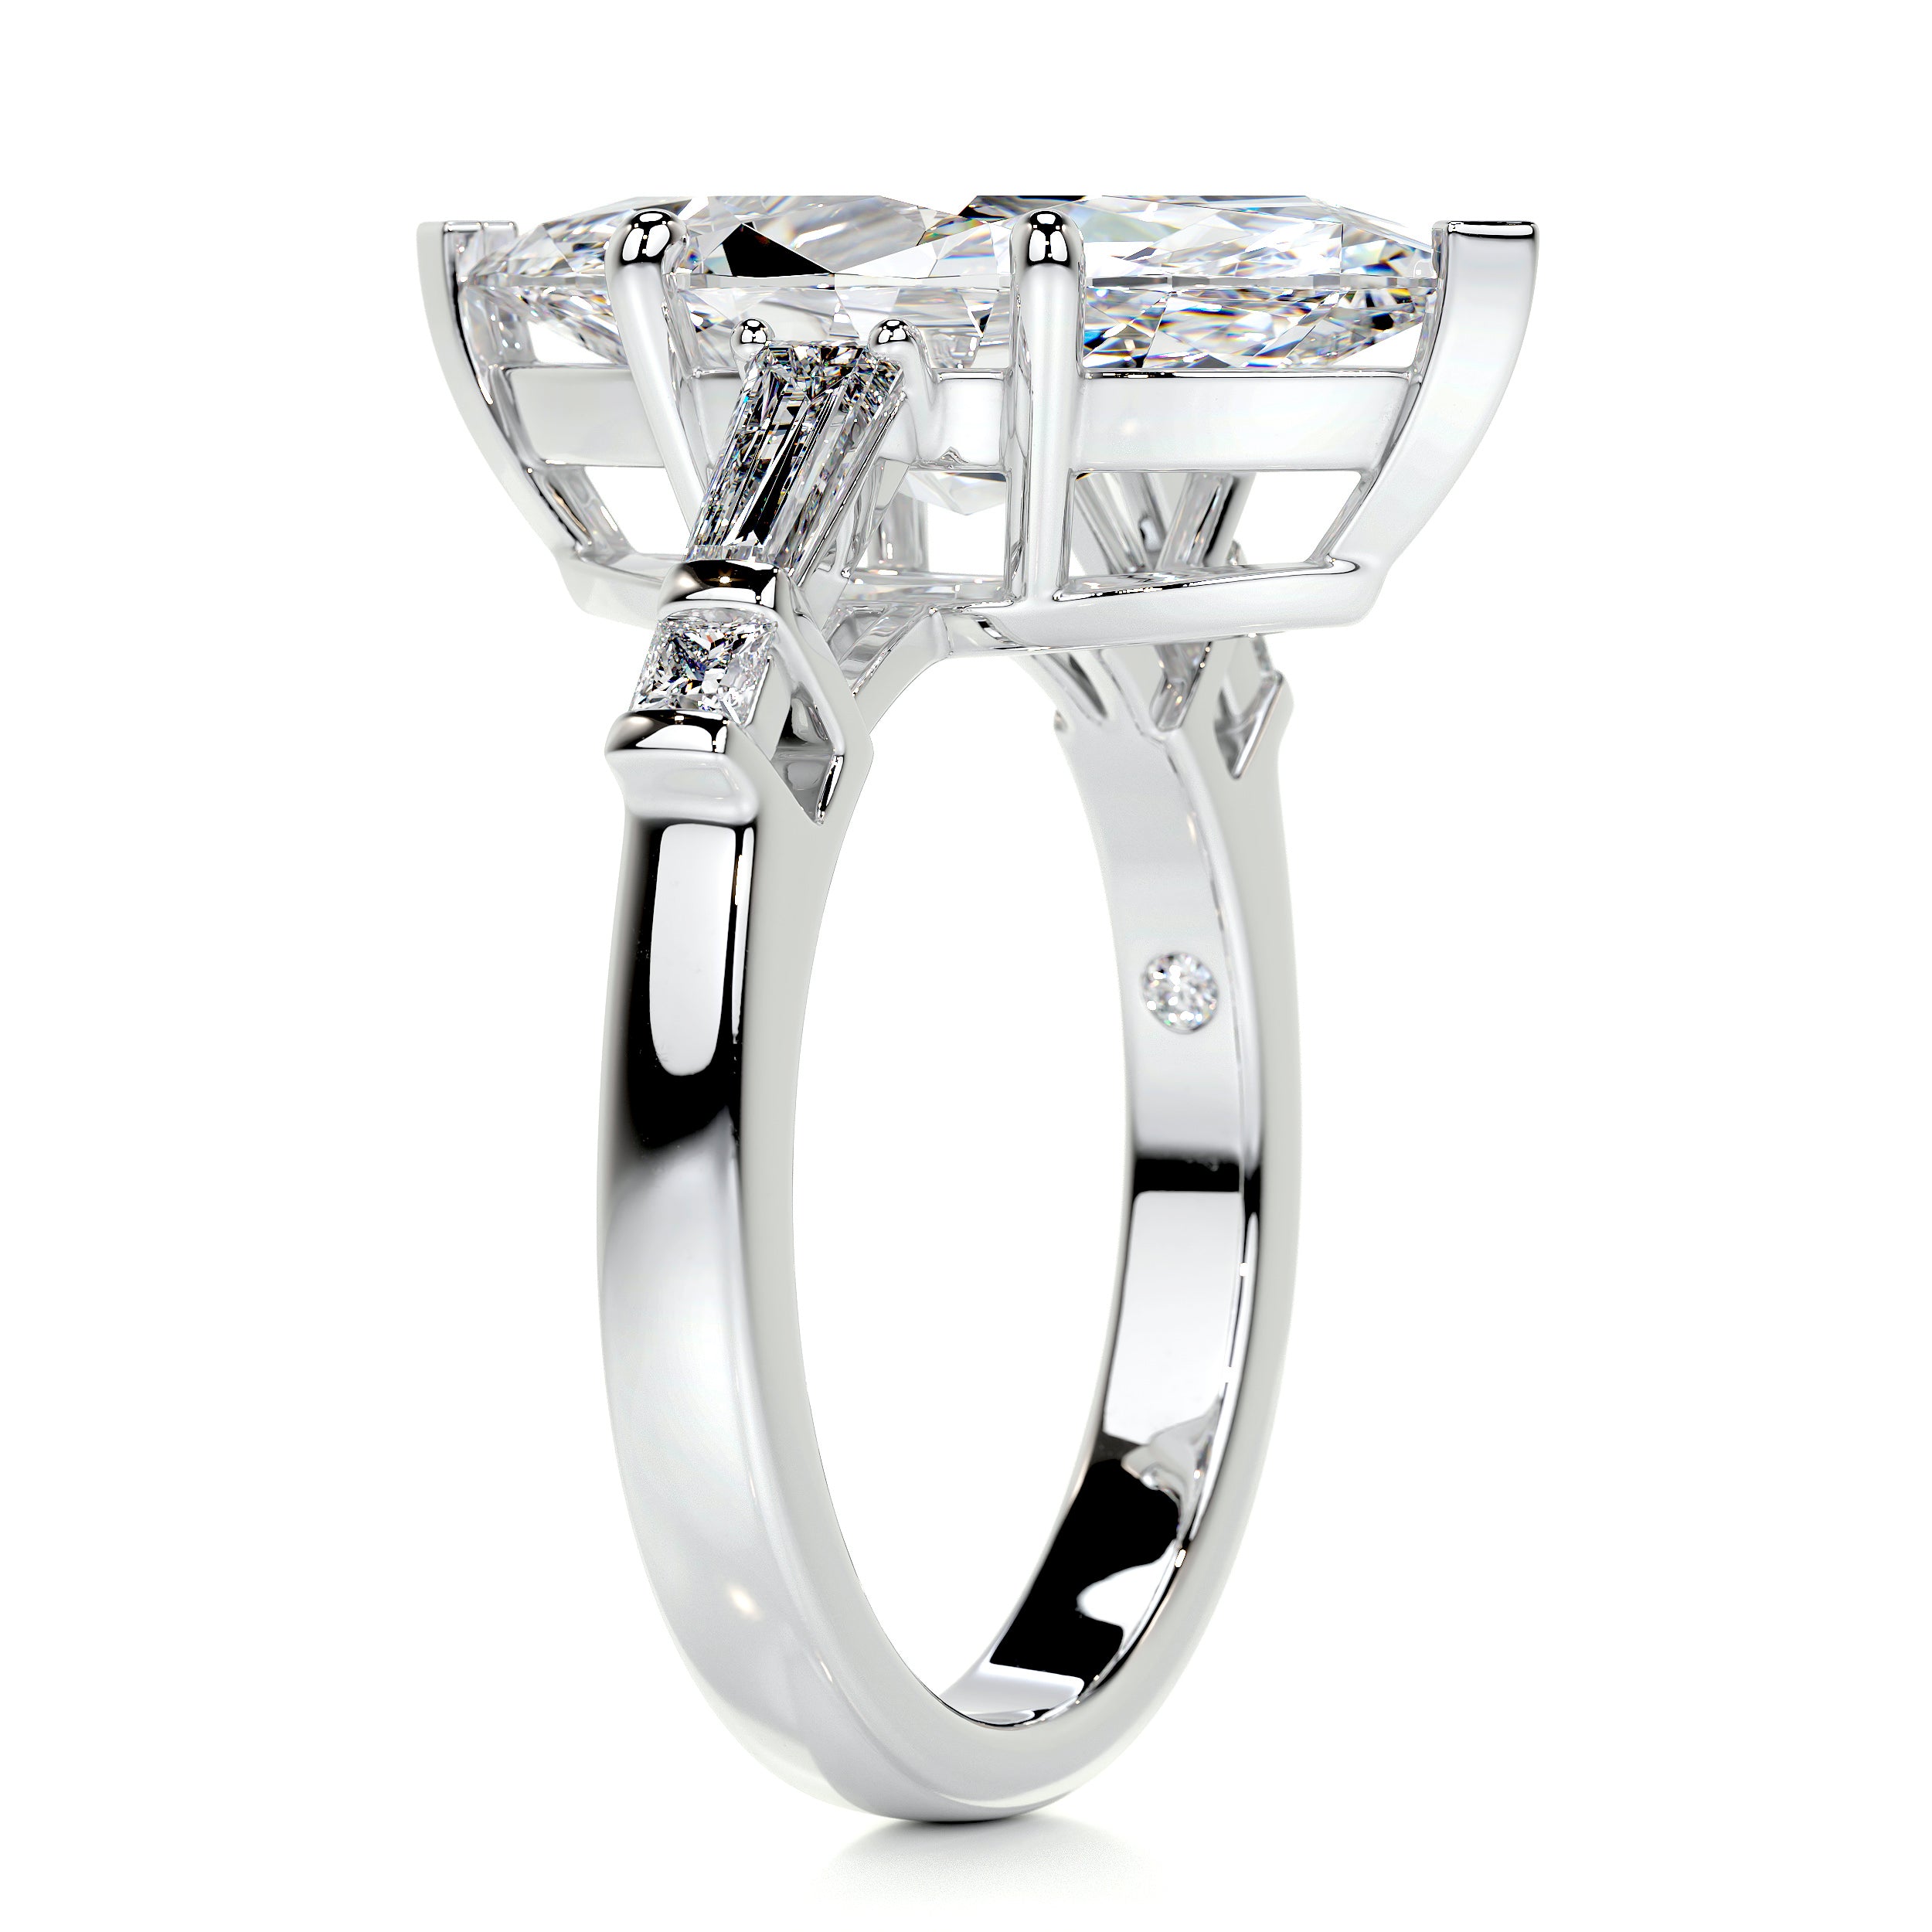 Tessa Diamond Engagement Ring   (5.3 Carat) -14K White Gold